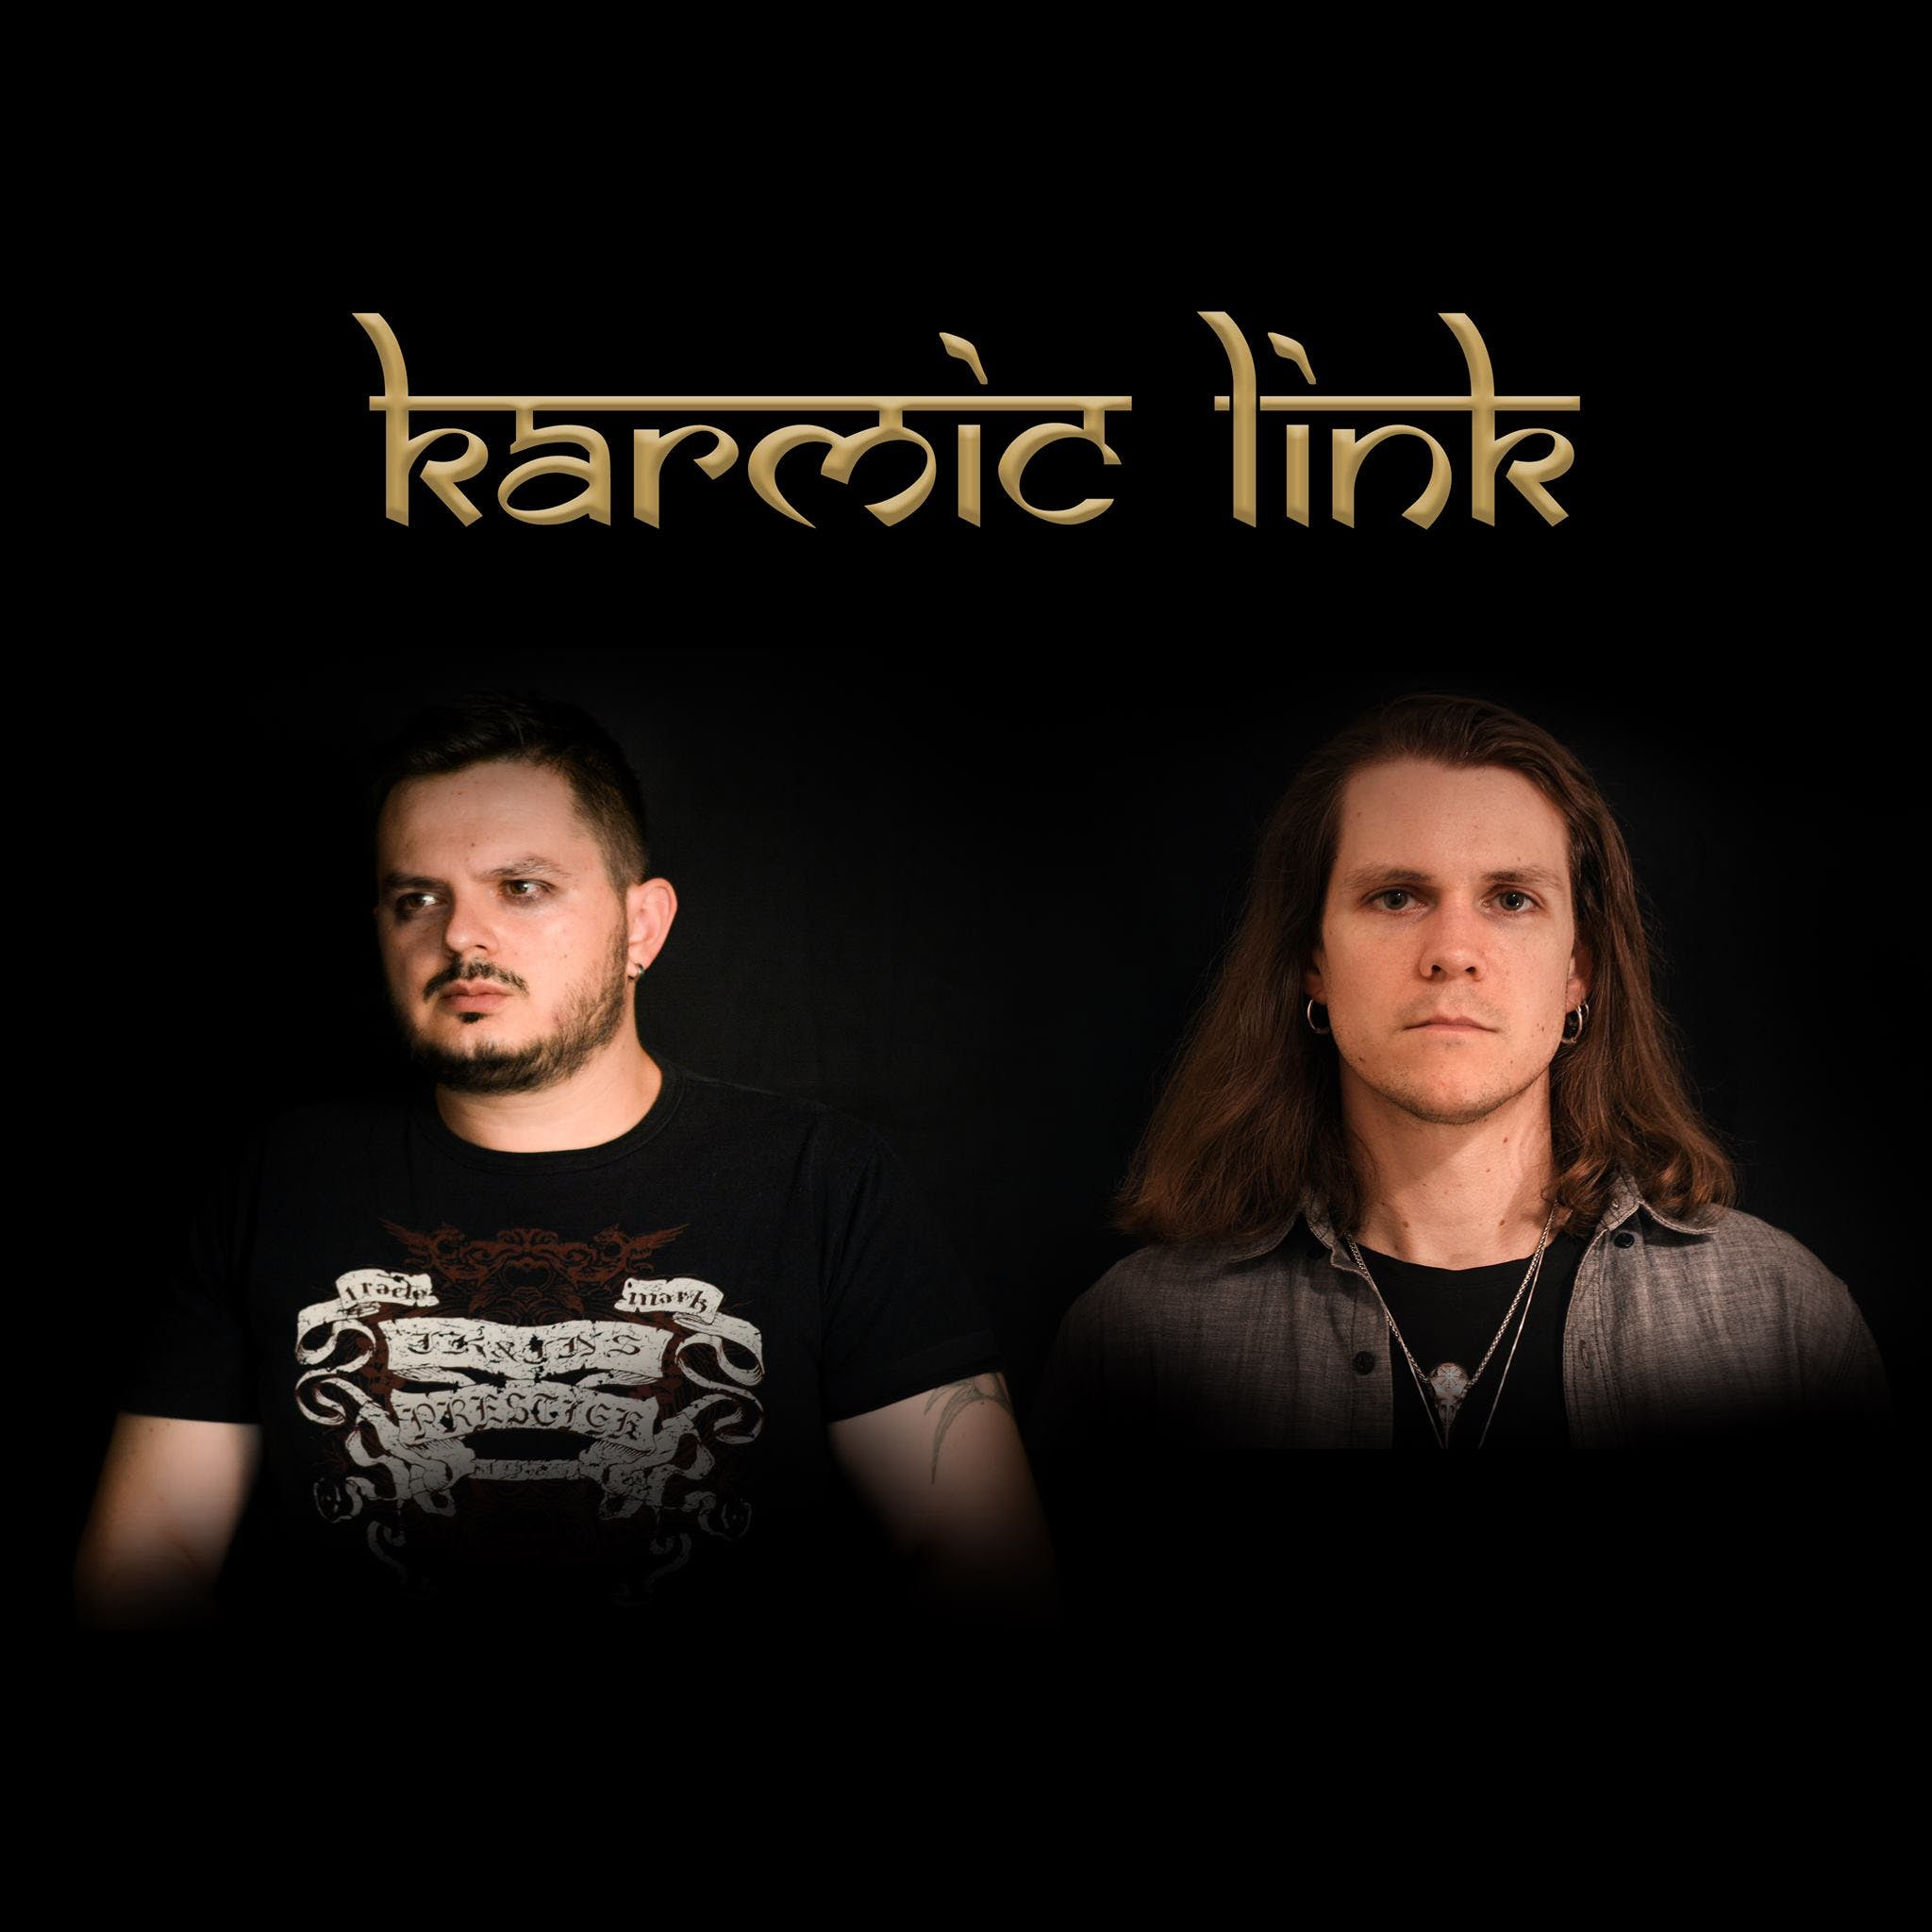 Karmic Link Posts Cyberpunk Lyric Video “The Tone of C” - Contemporary-Establishment